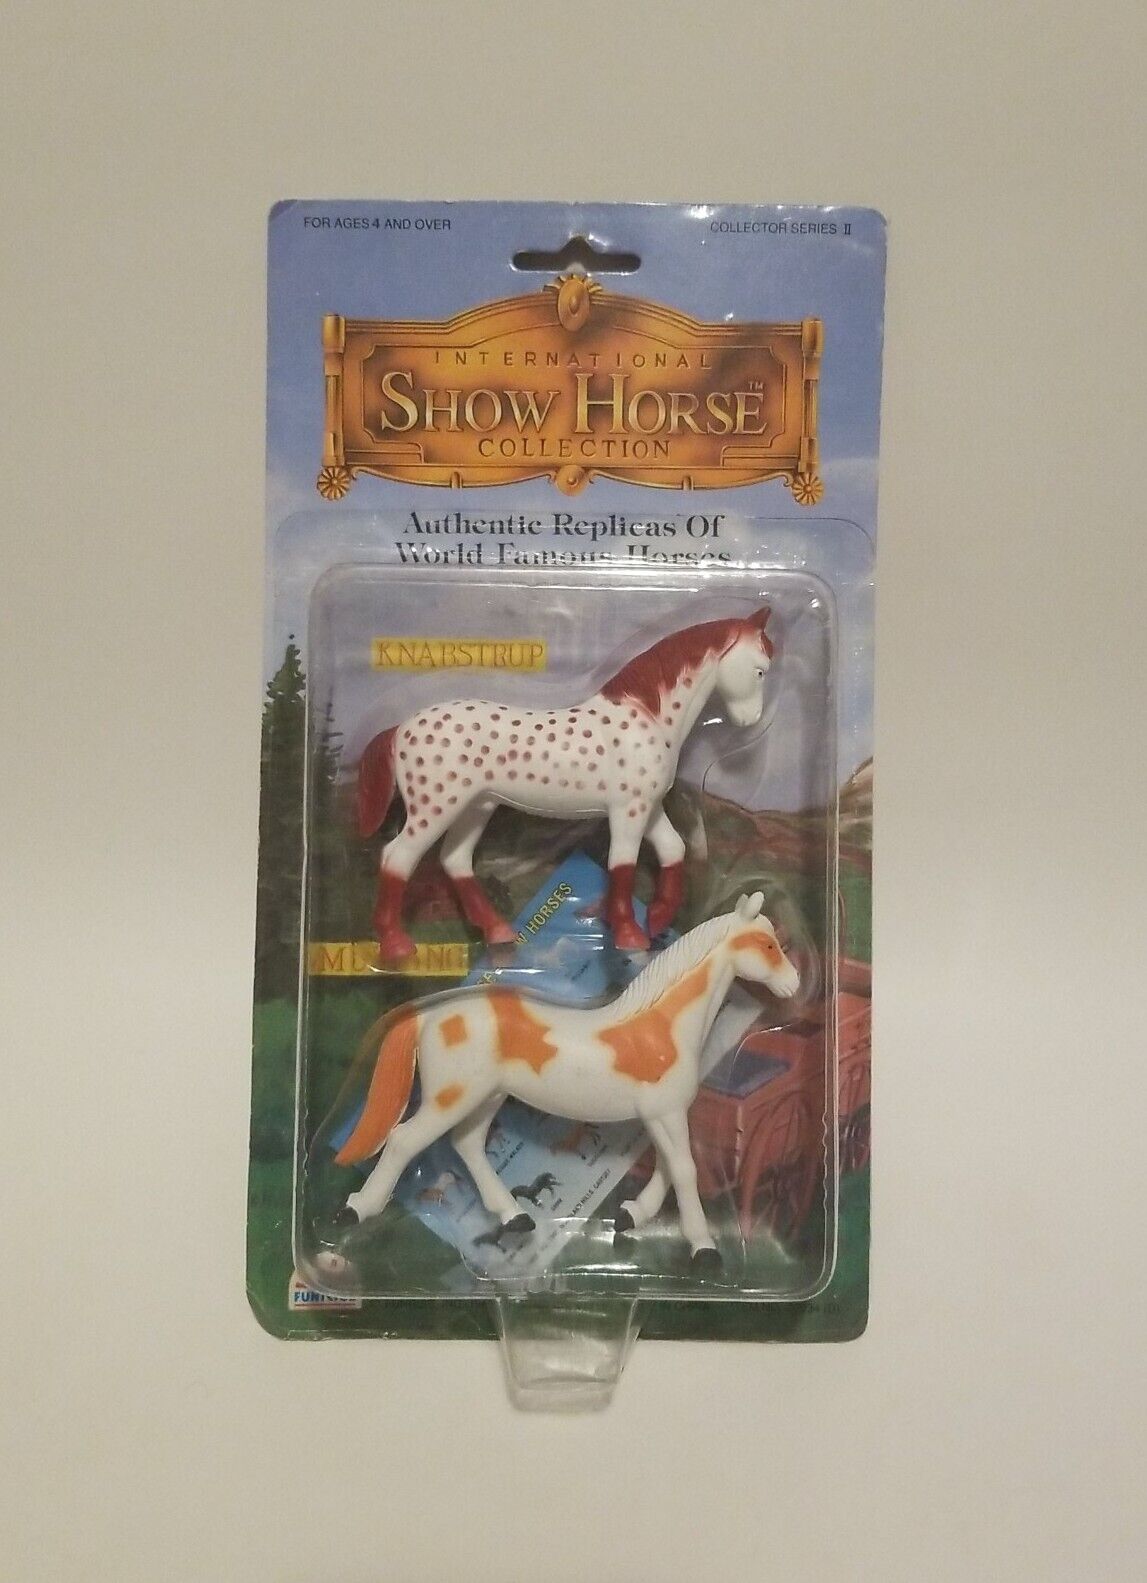 NEW 1989 Funrise International Show Horse Collection MUSTANG & KNABSTRUP Figures